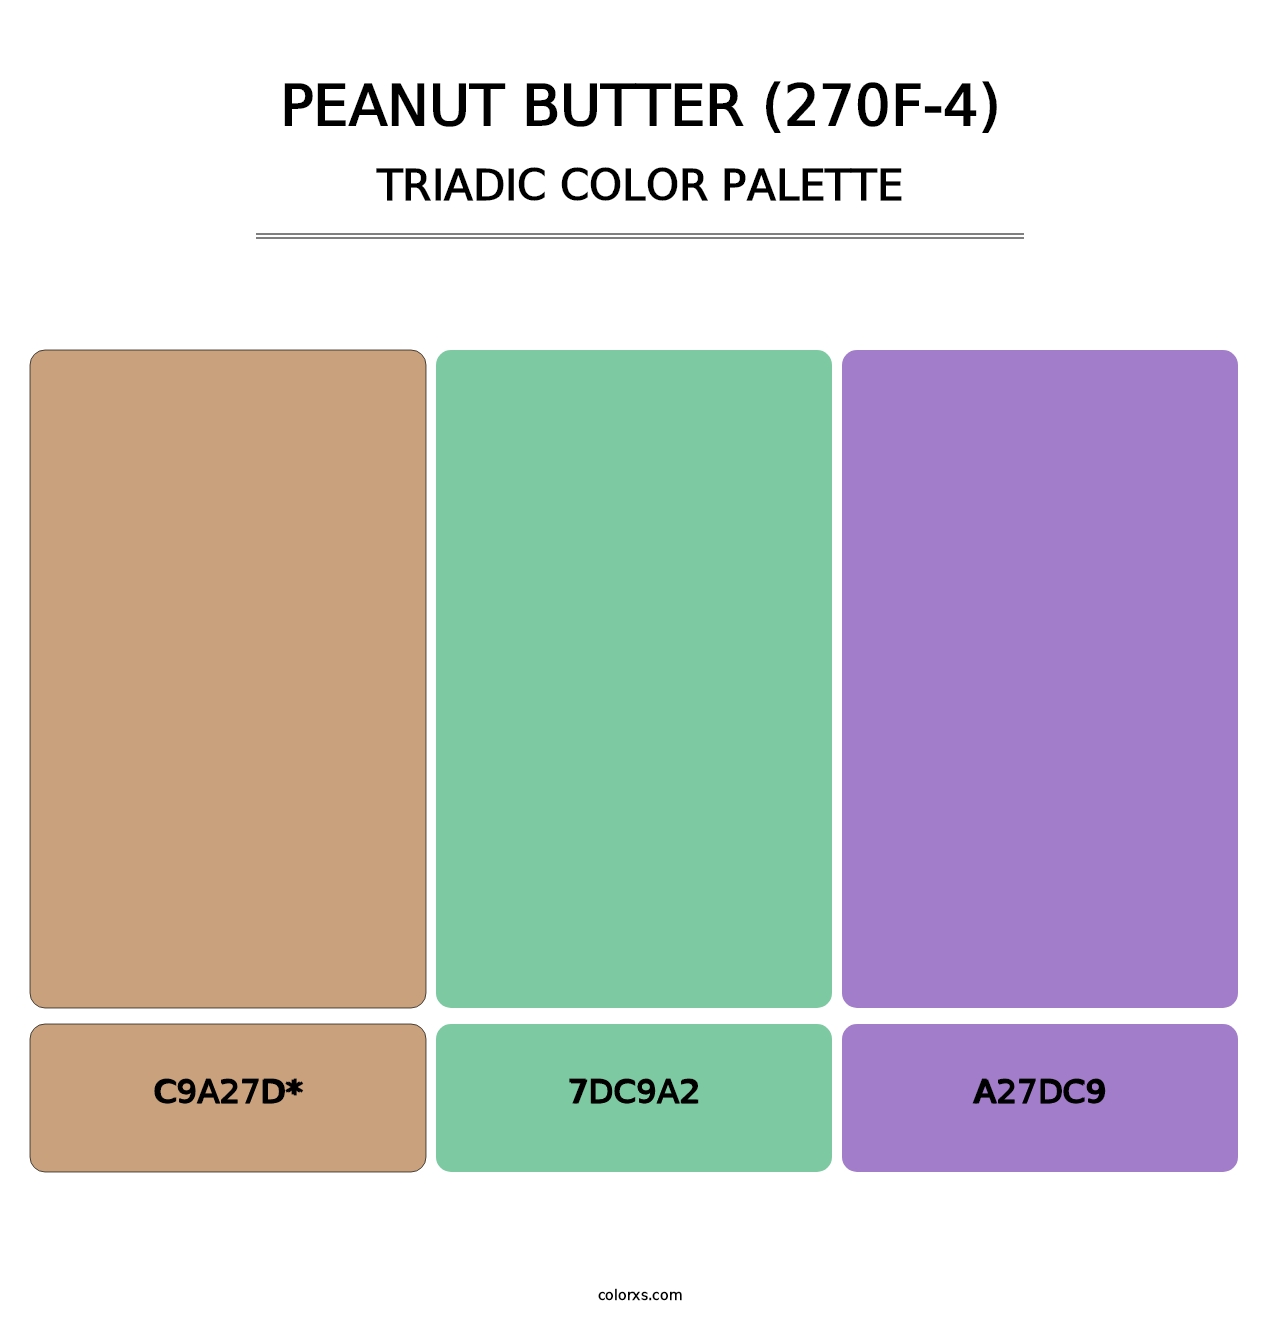 Peanut Butter (270F-4) - Triadic Color Palette